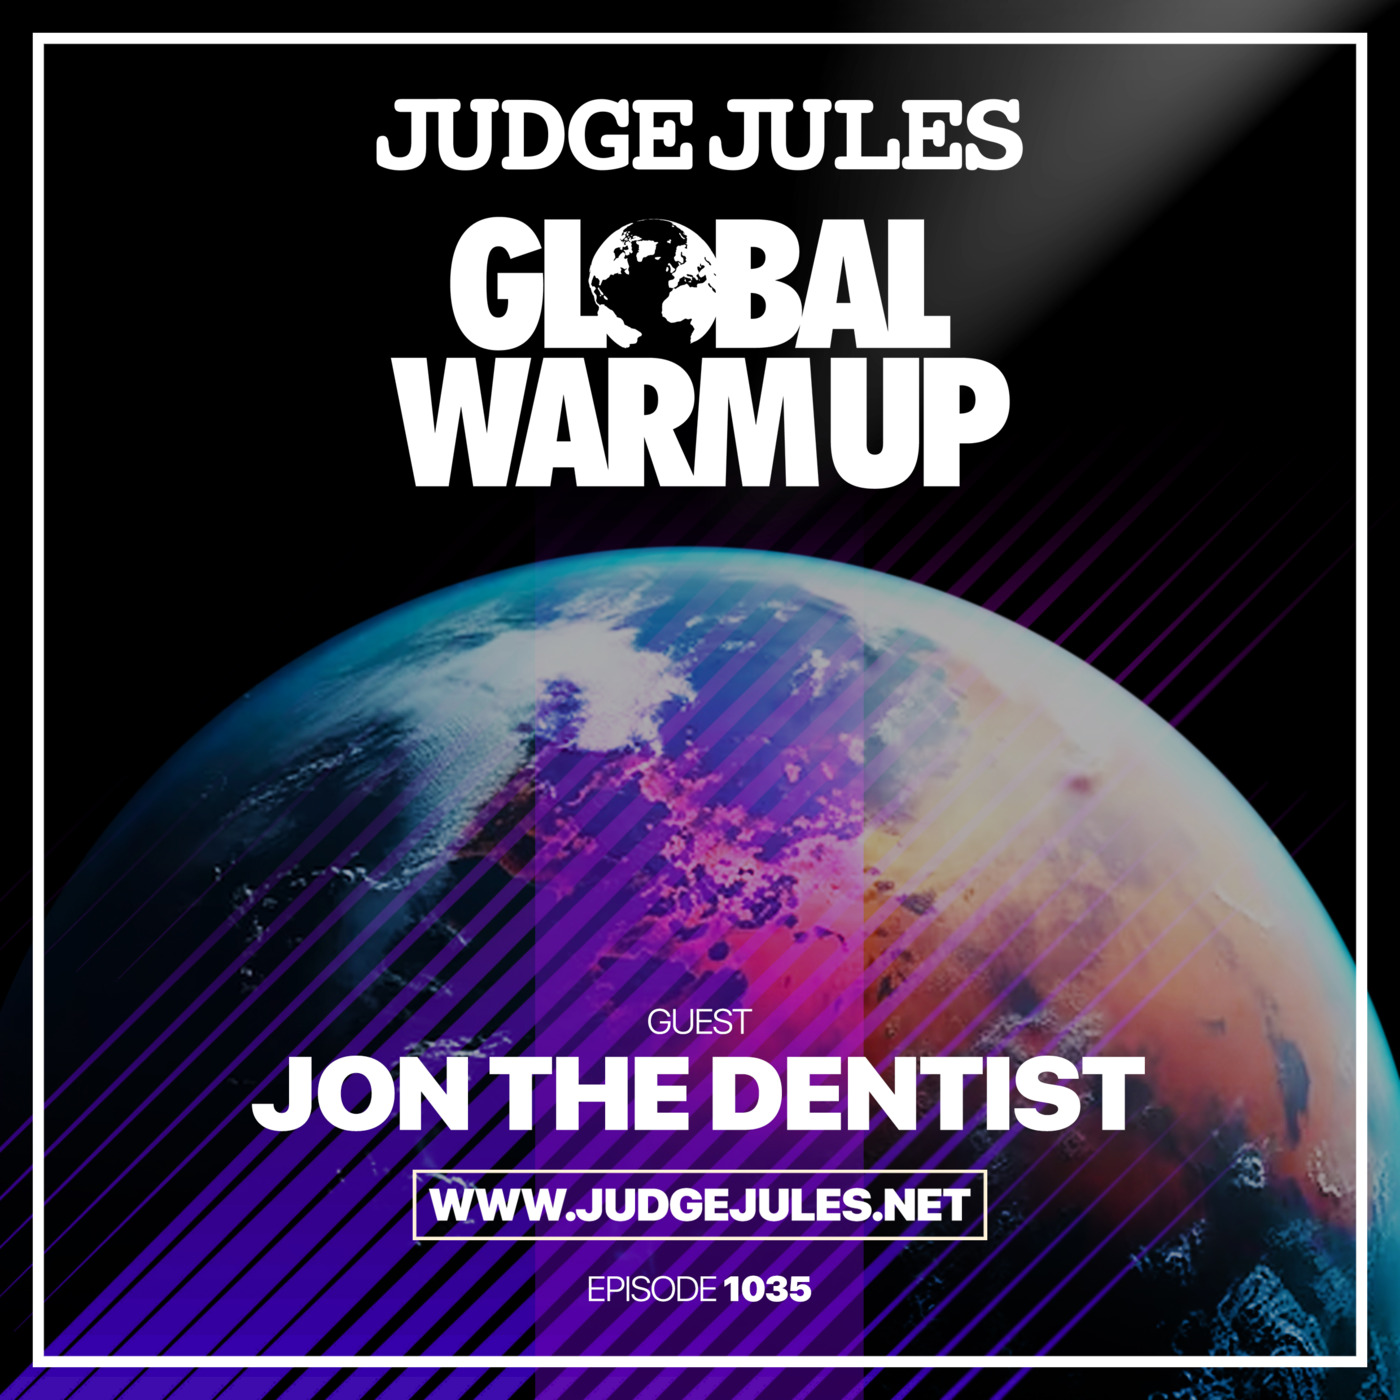 Episode 1035: JUDGE JULES PRESENTS THE GLOBAL WARM UP EPISODE 1035